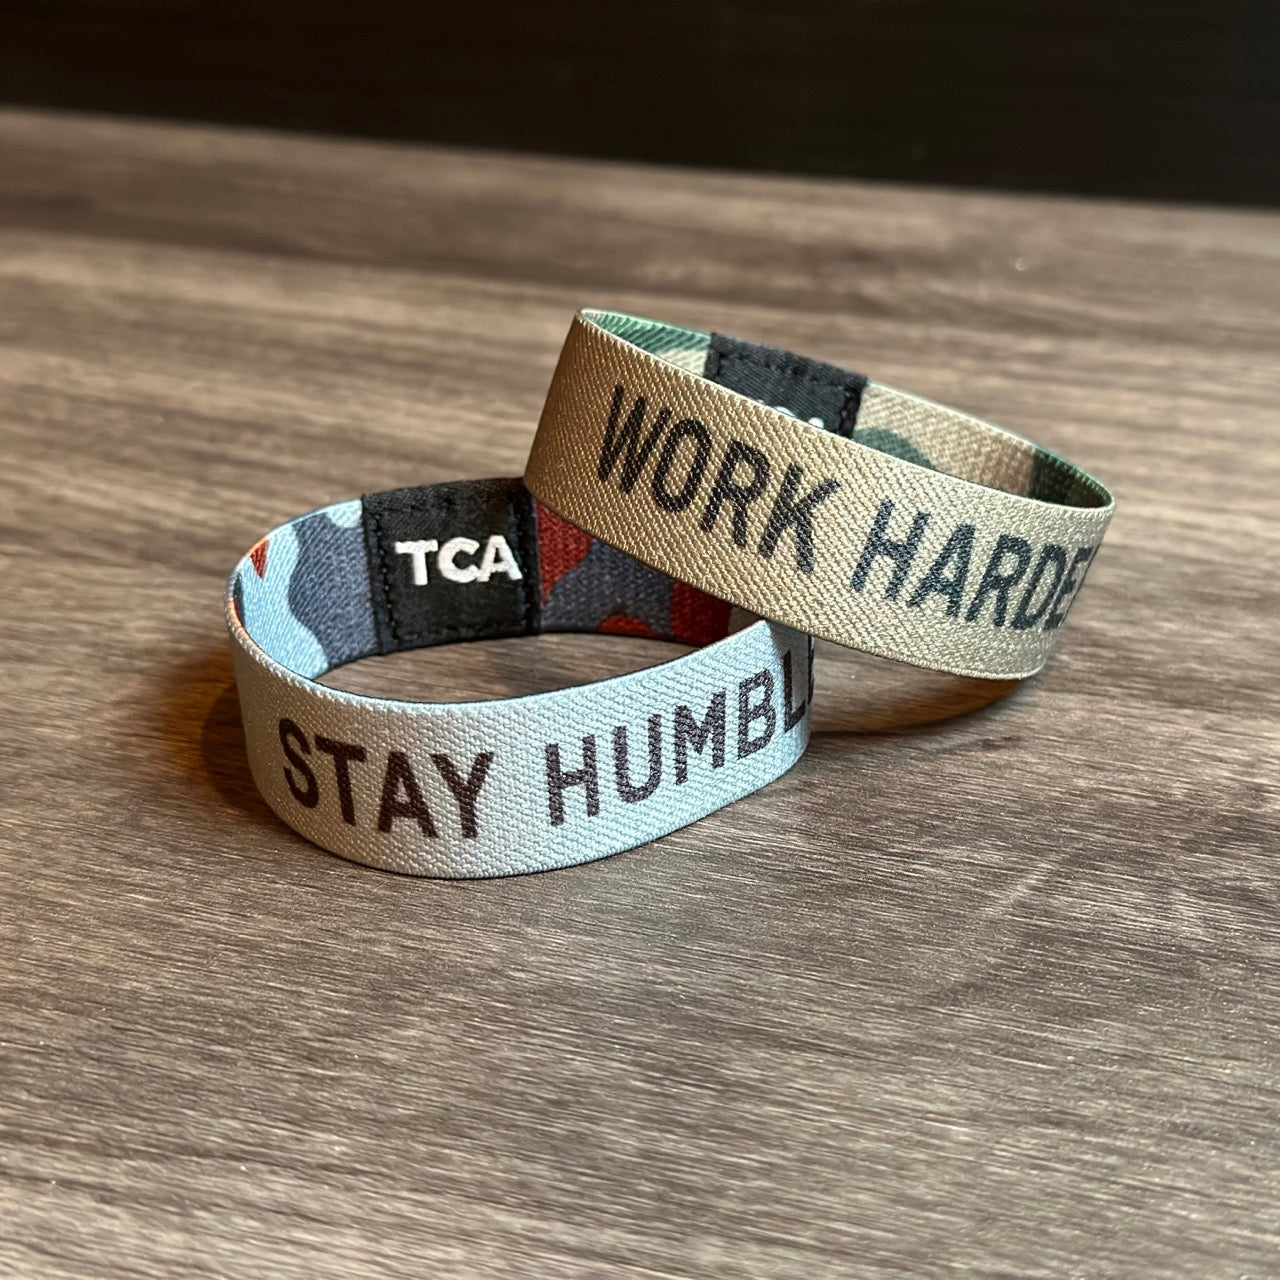 Stay Humble Wristband